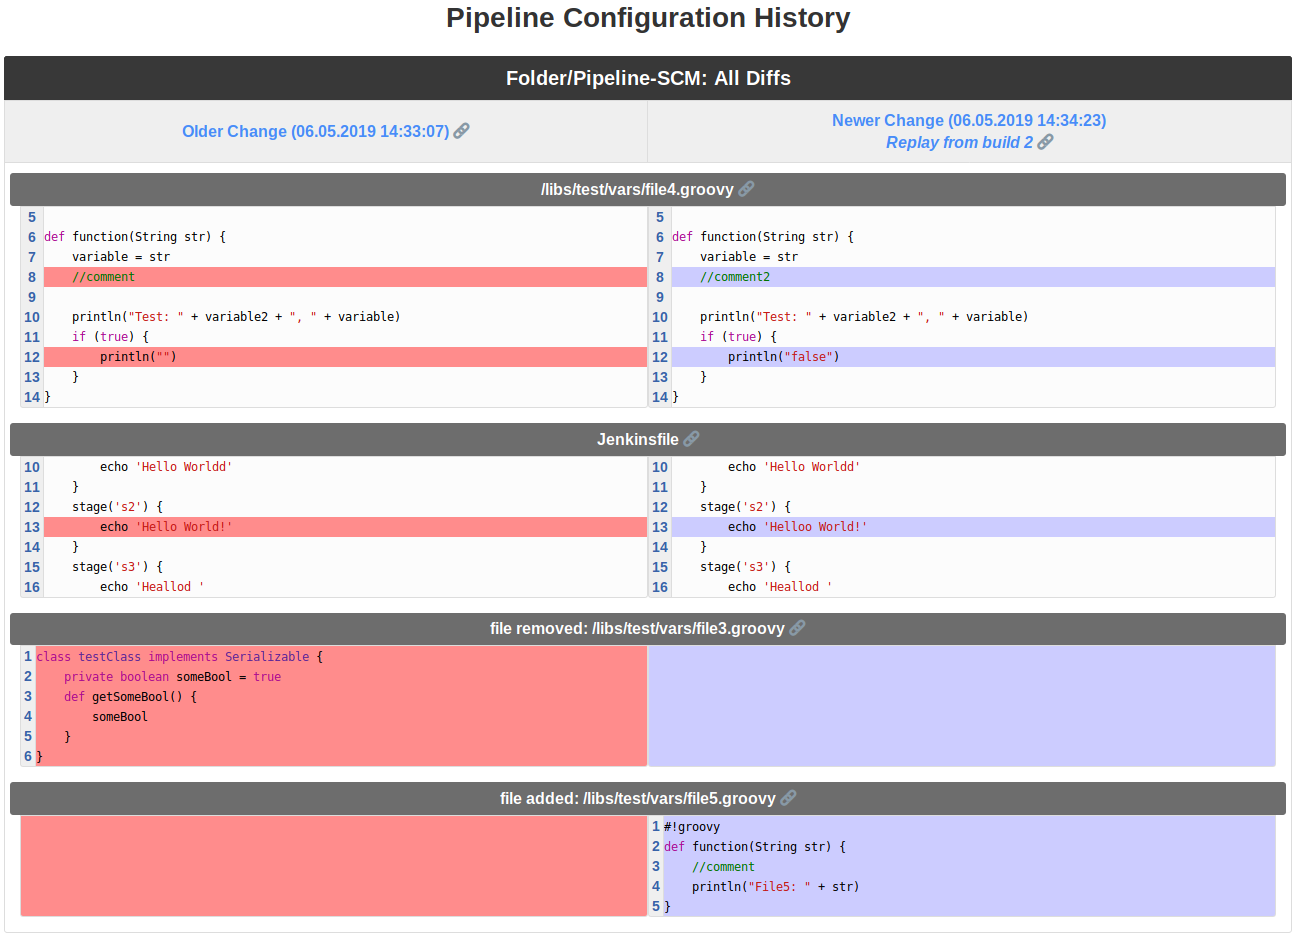 Screenshot of Pipeline Configuration History